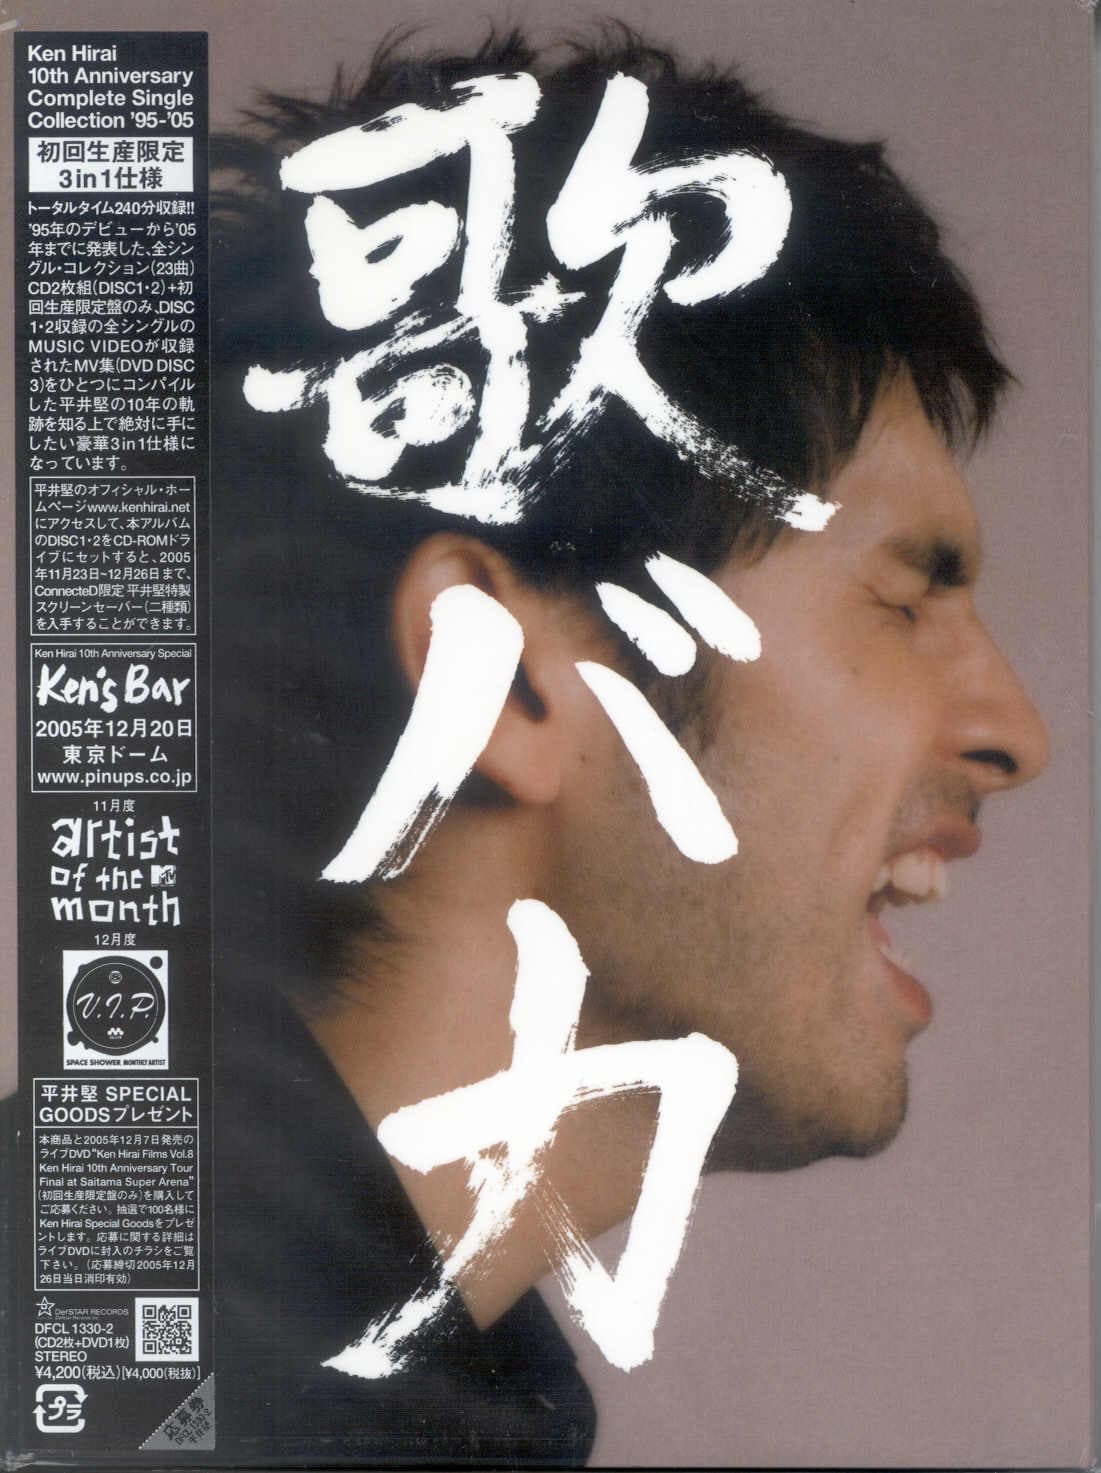 Ken Hirai 10th Anniversary Complete Single Collection 95-05 Utabaka